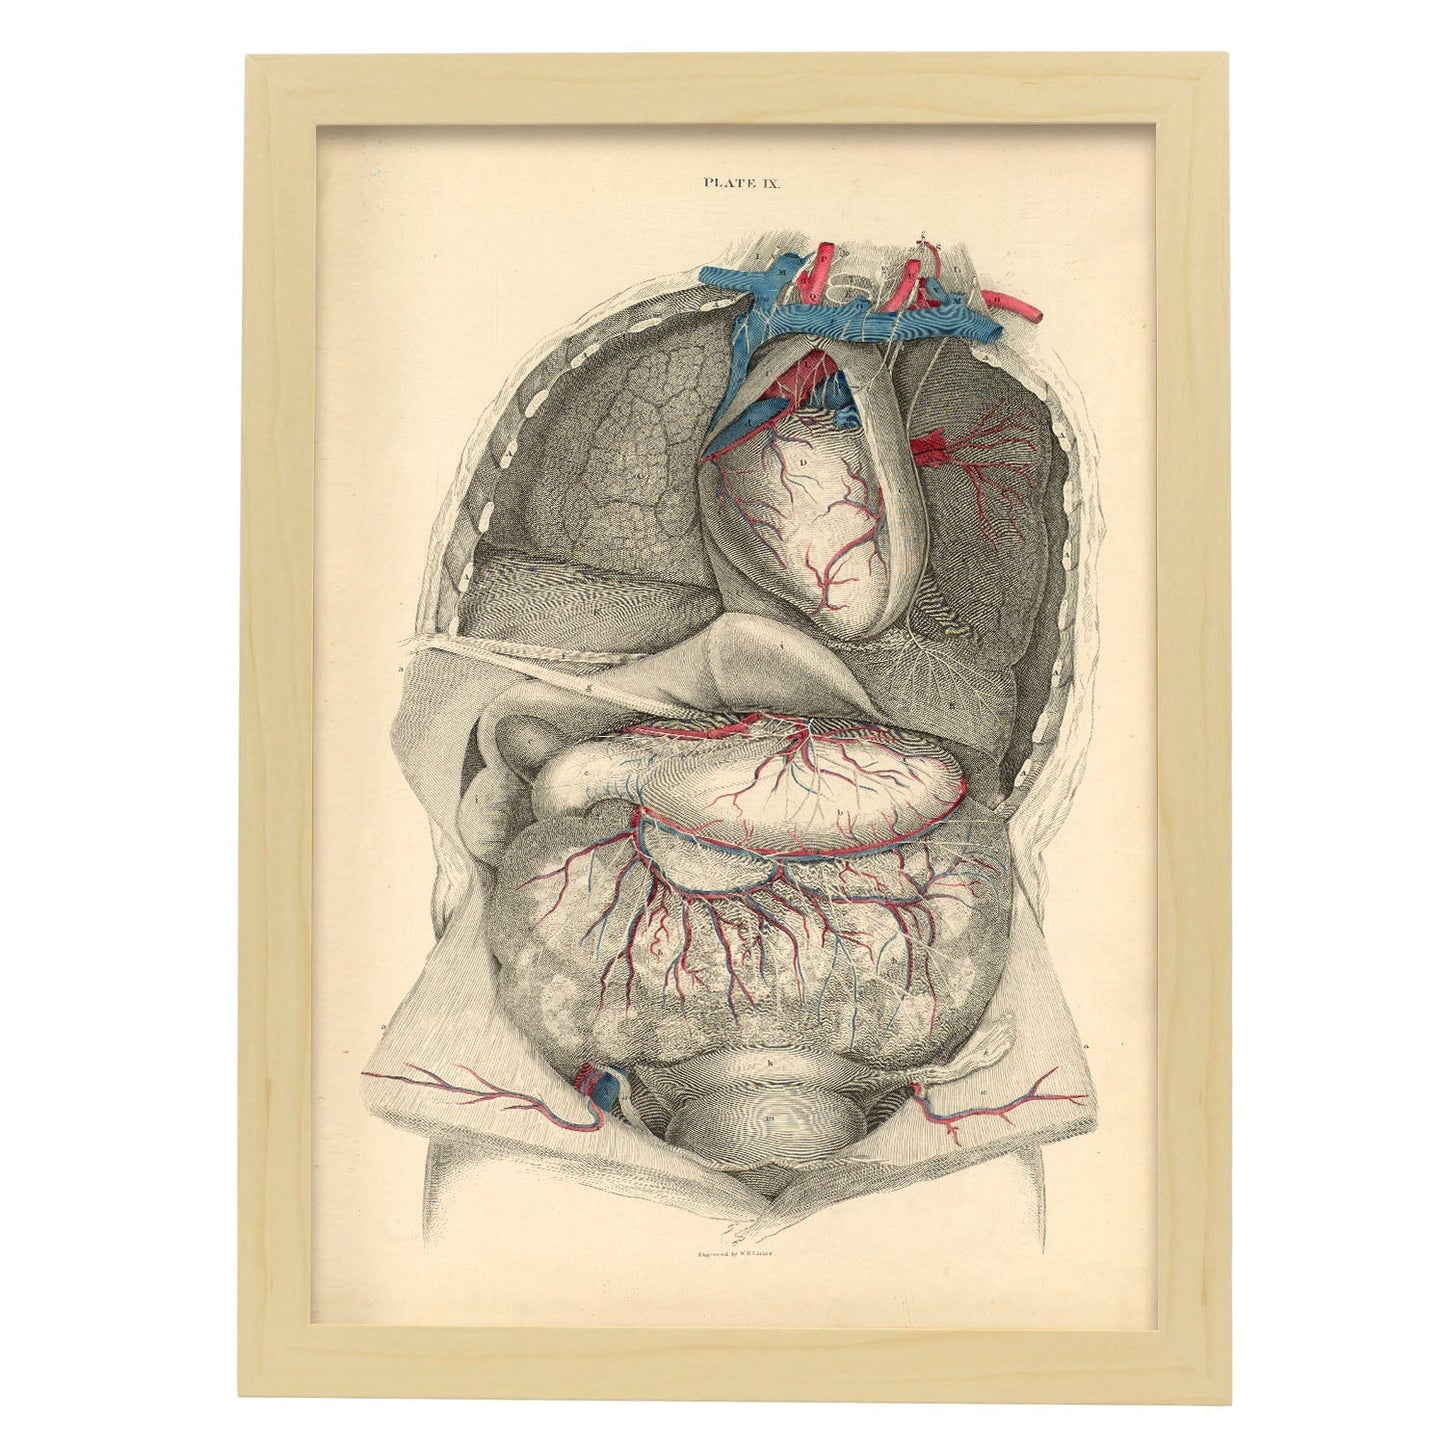 Dissection of the thorax and abdomen-Artwork-Nacnic-A3-Marco Madera clara-Nacnic Estudio SL